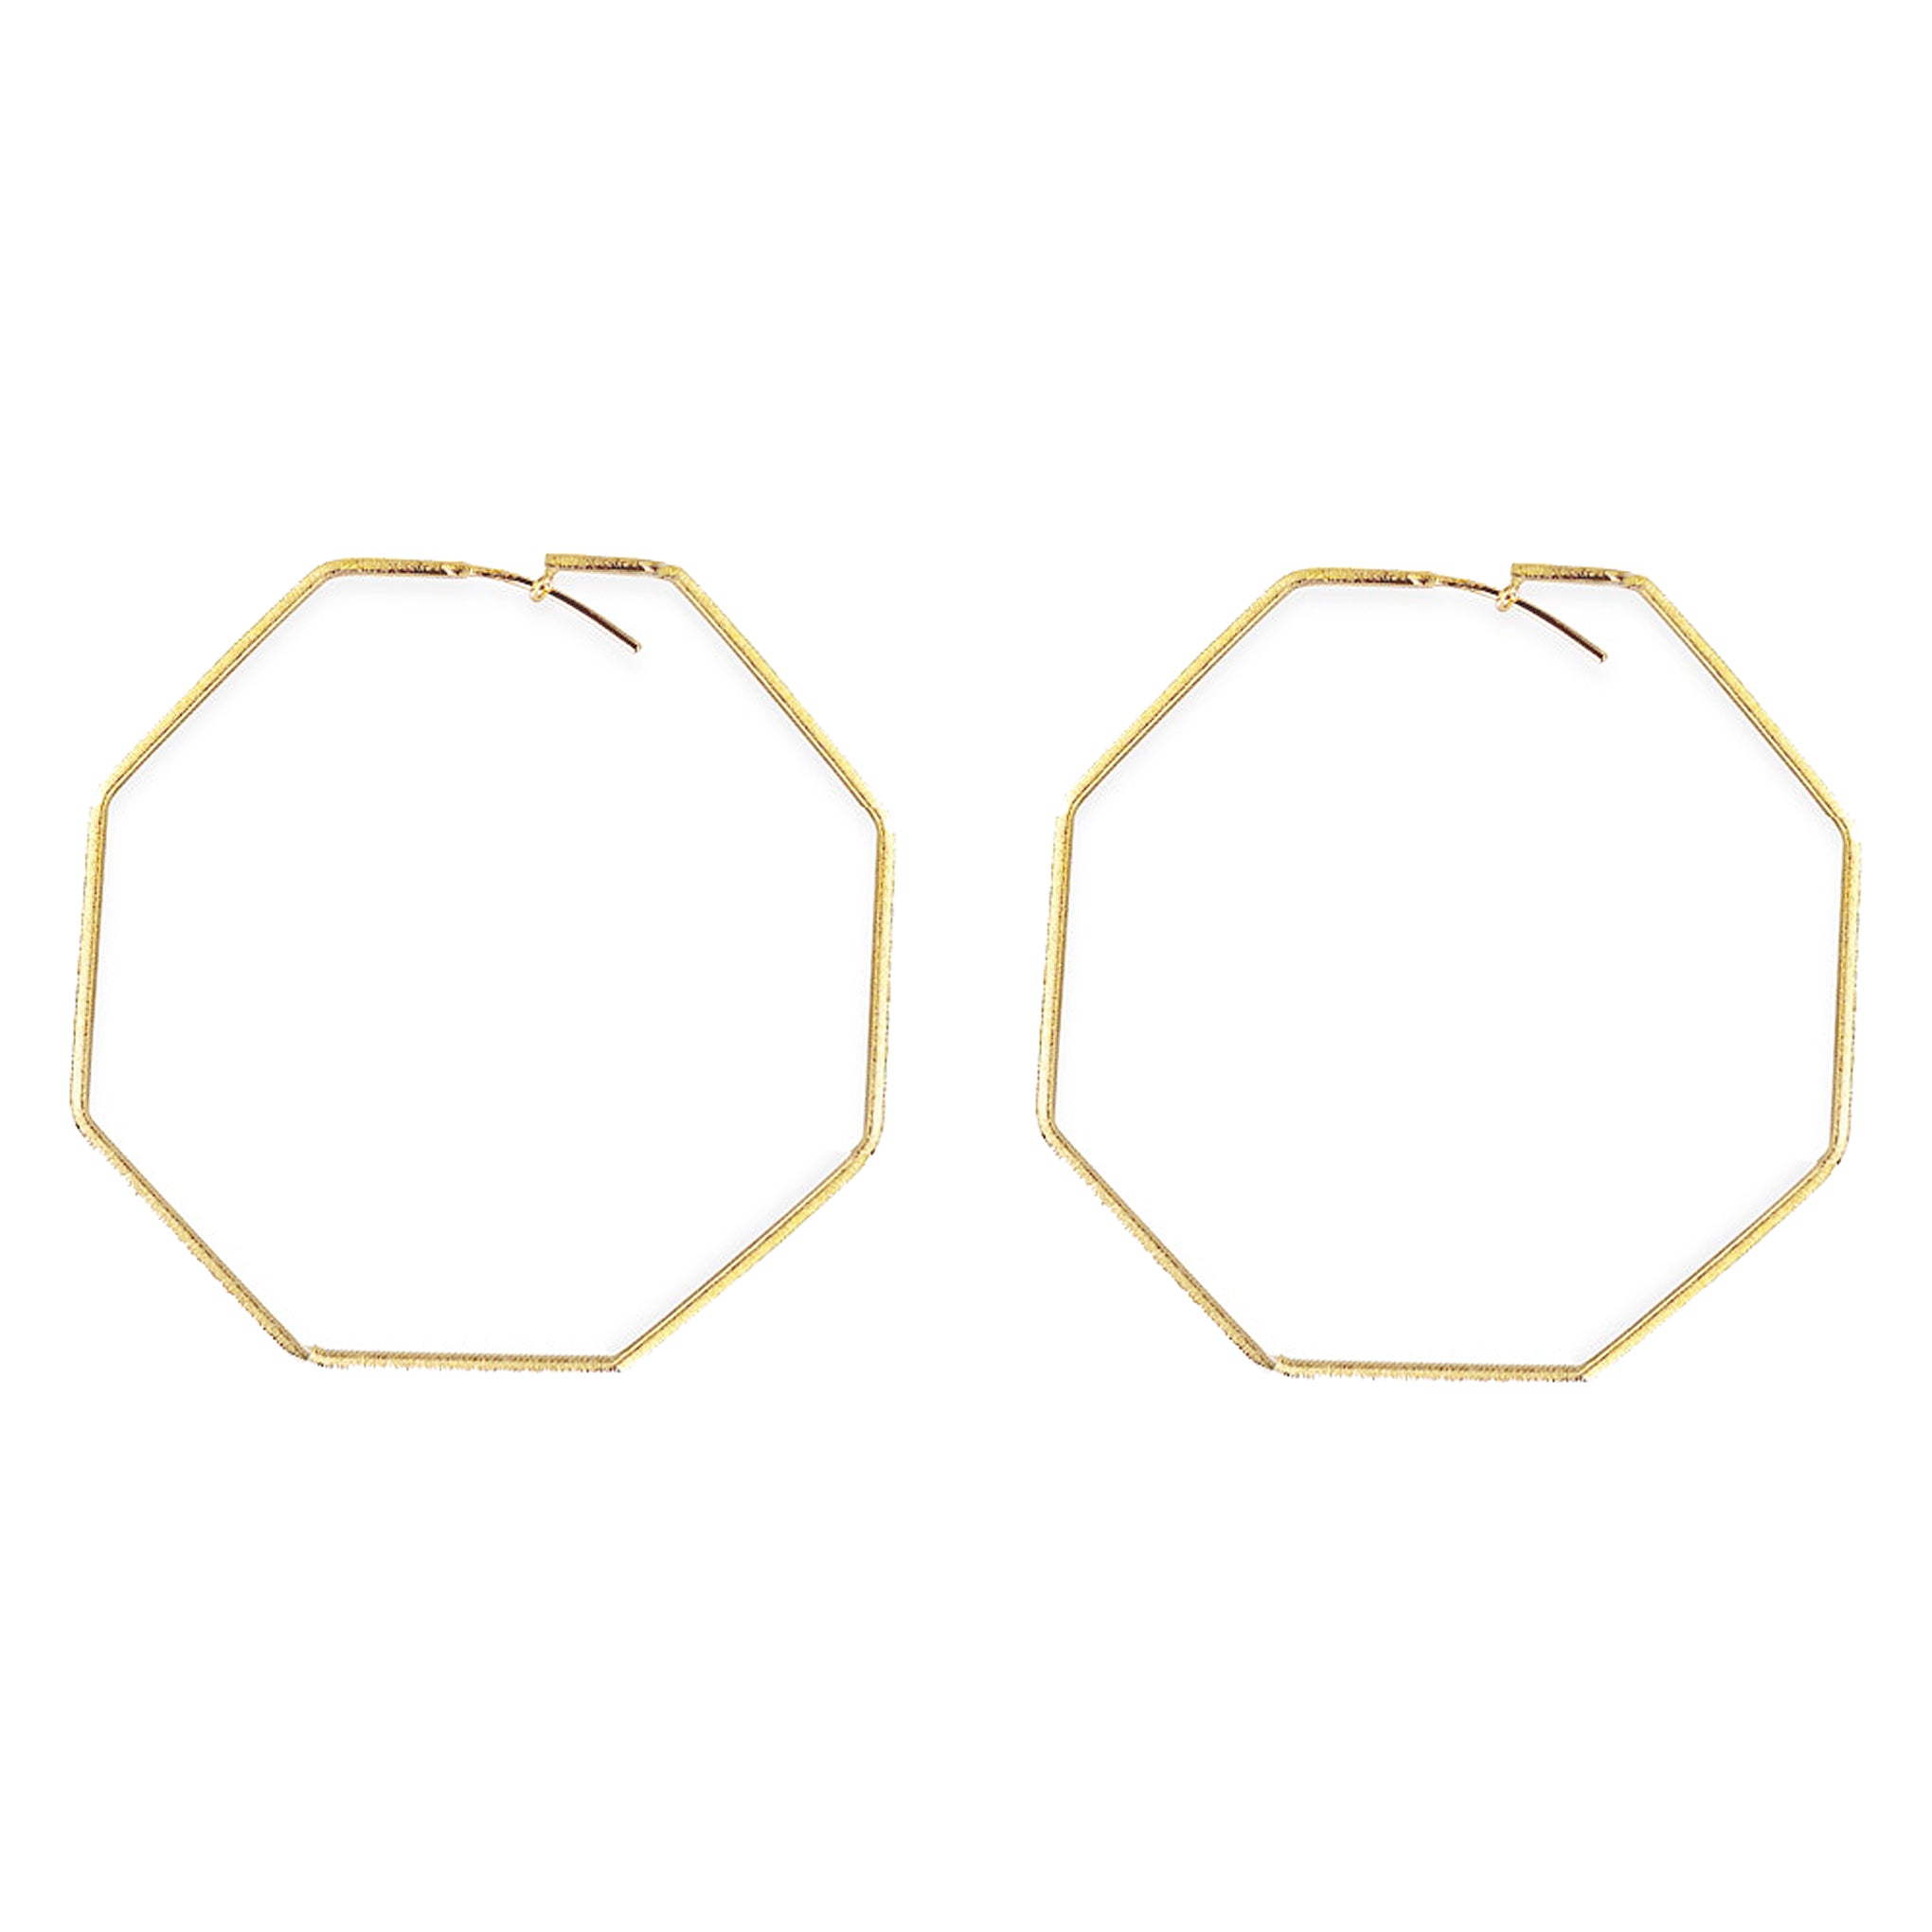 Sheila Fajl Amber Geometrical Hoop Earrings in 18k Brushed Gold Plated